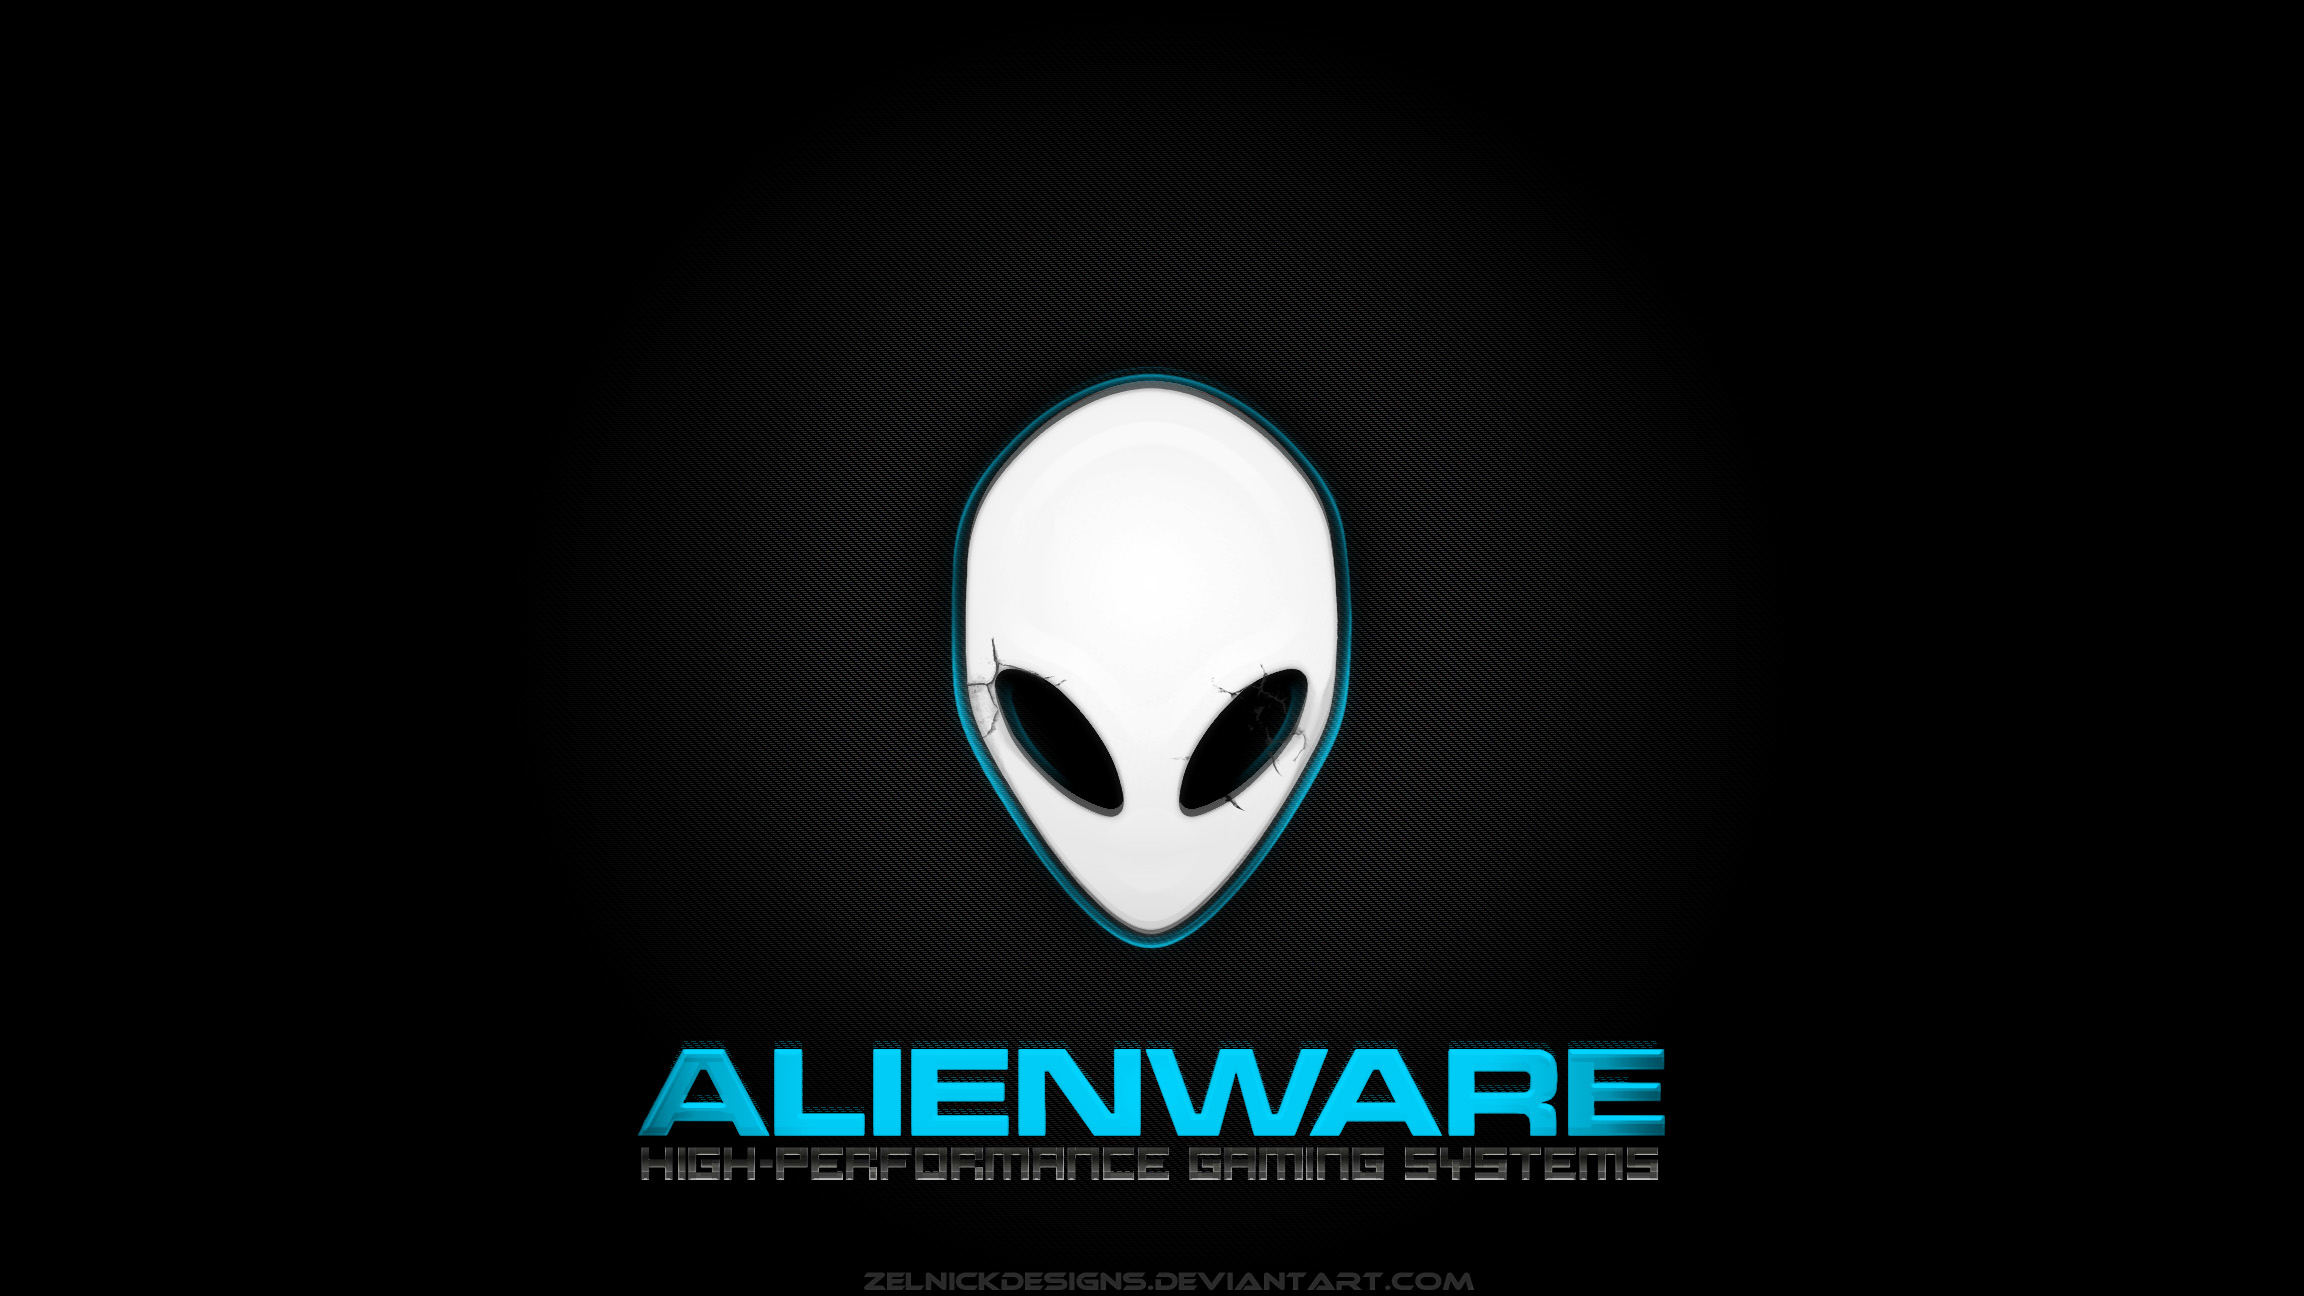 Alienware Wallpaper Pack V2 By Zelnickdesigns